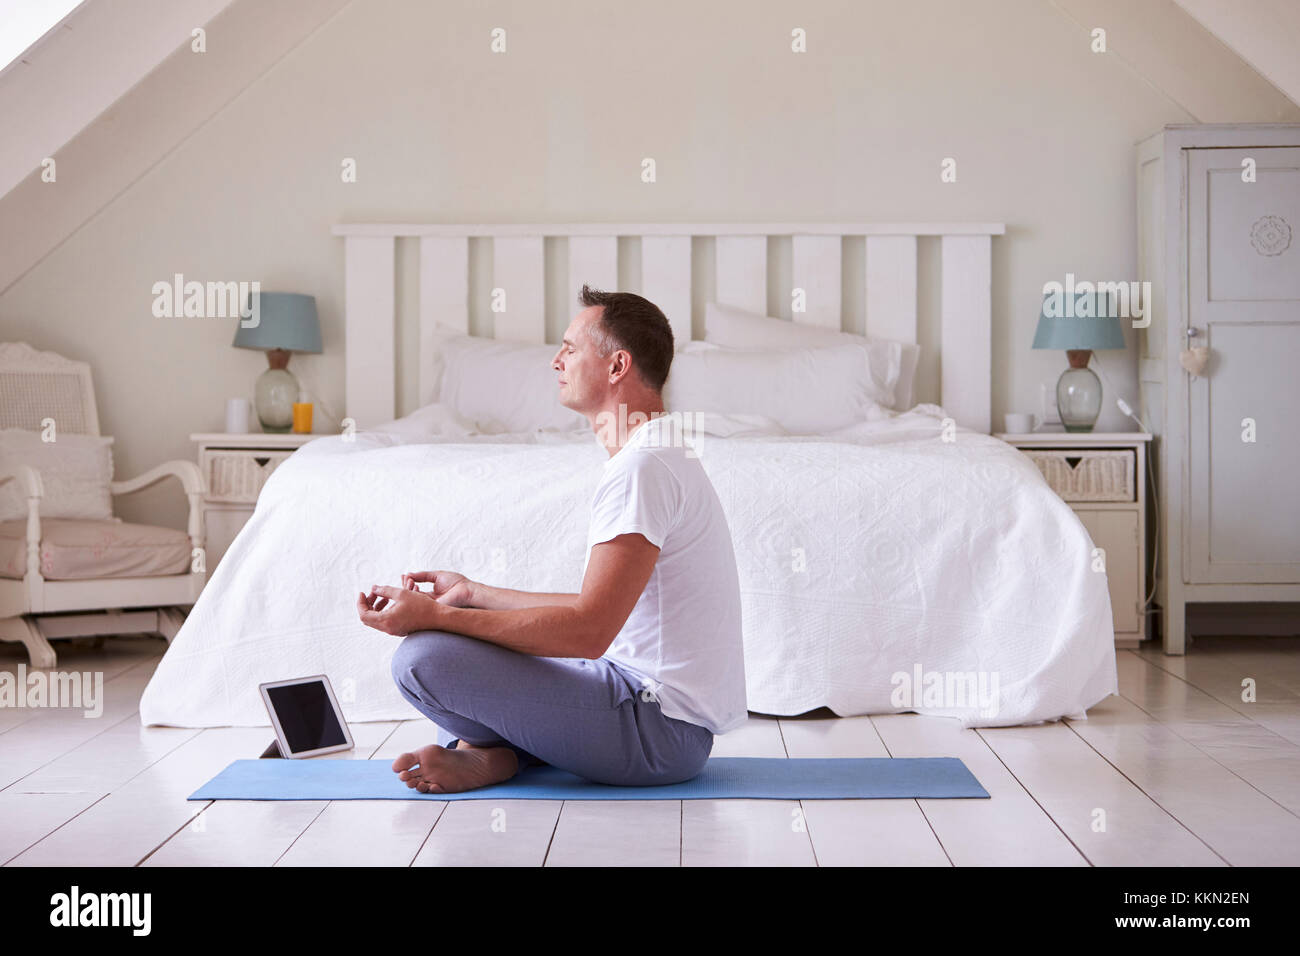 Mature Man With Digital Tablet Using Meditation App In Bedroom Stock Photo